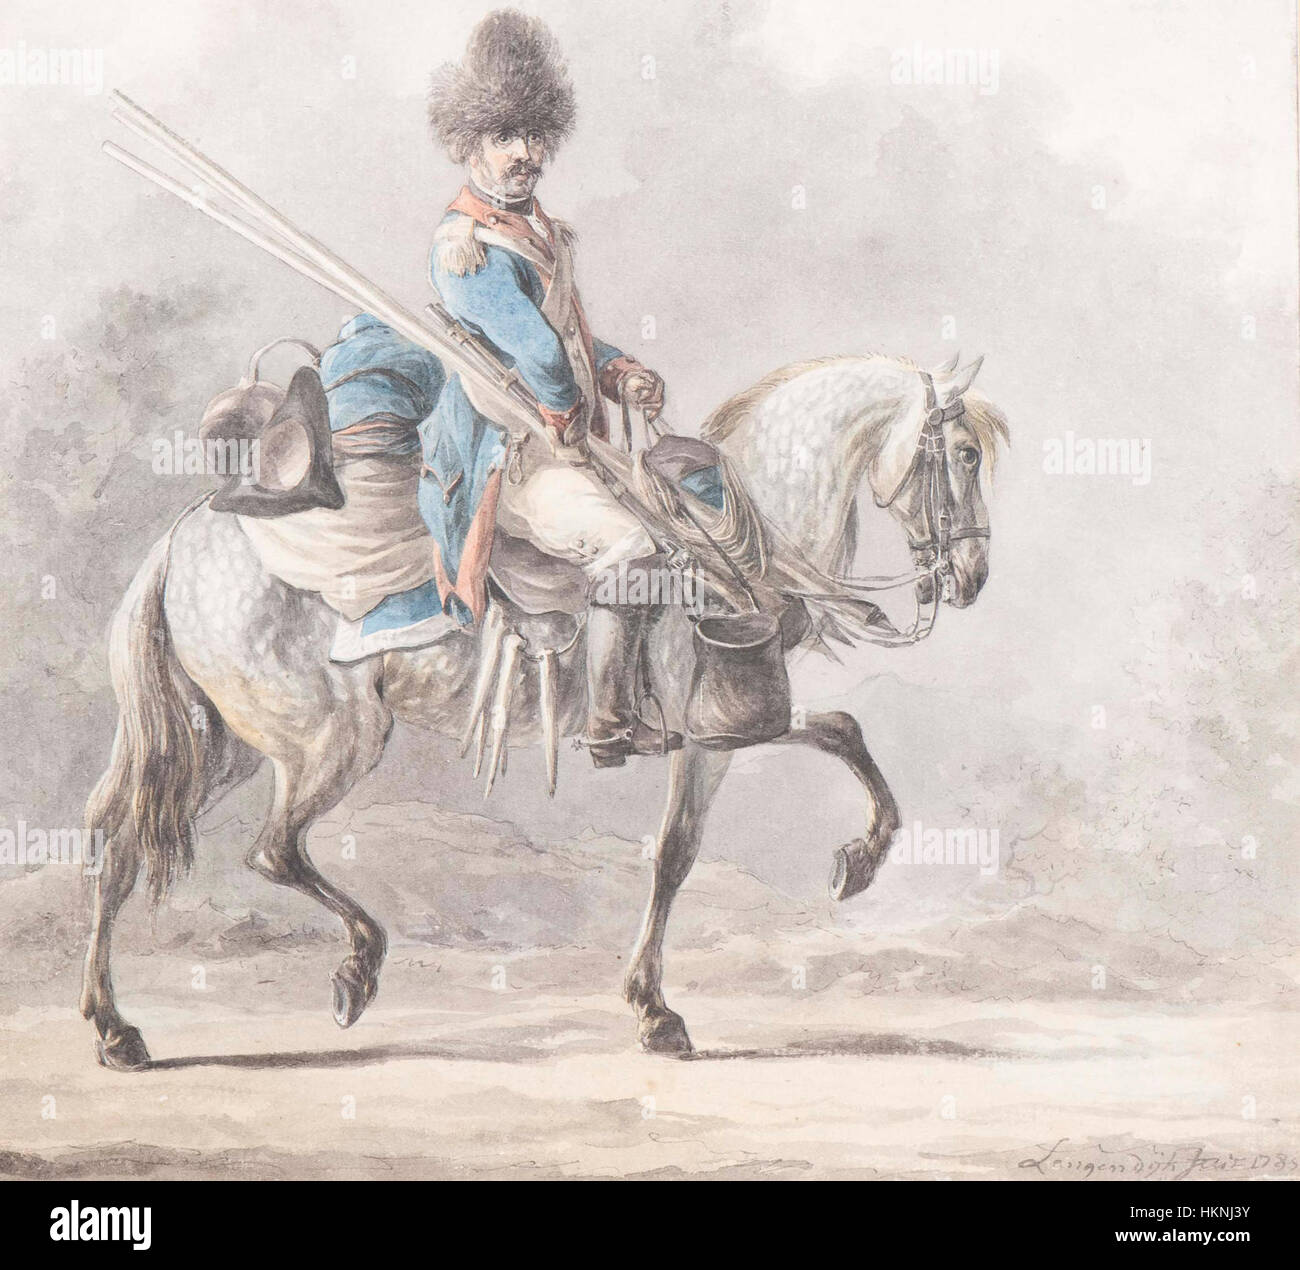 A mounted cavalryman, by Dirk Langendijk (Rotterdam 1748 - 1805) Stock Photo